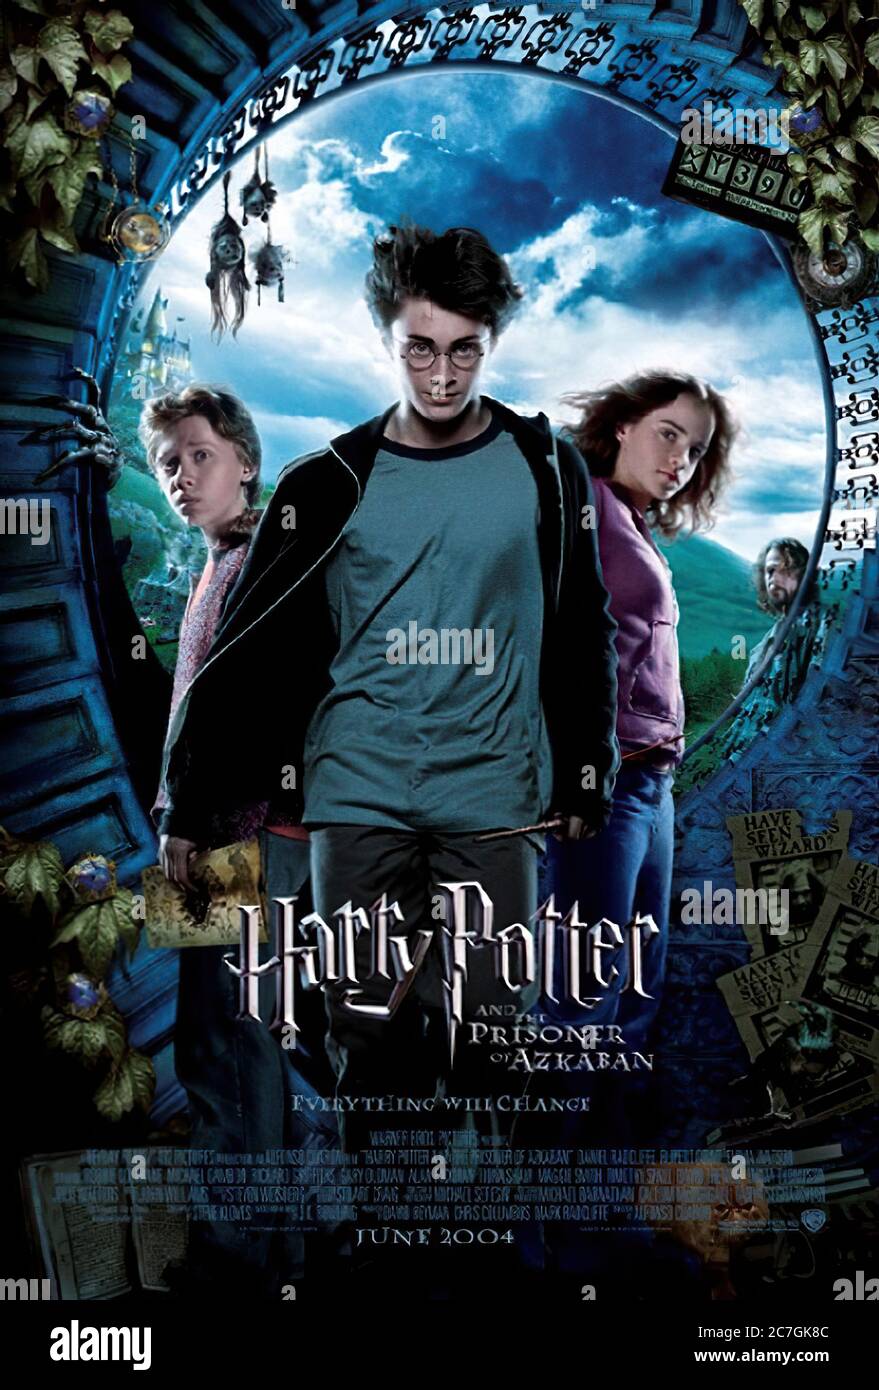 Harry Potter and the Prisoner of Azkaban - Movie Poster Stock Photo